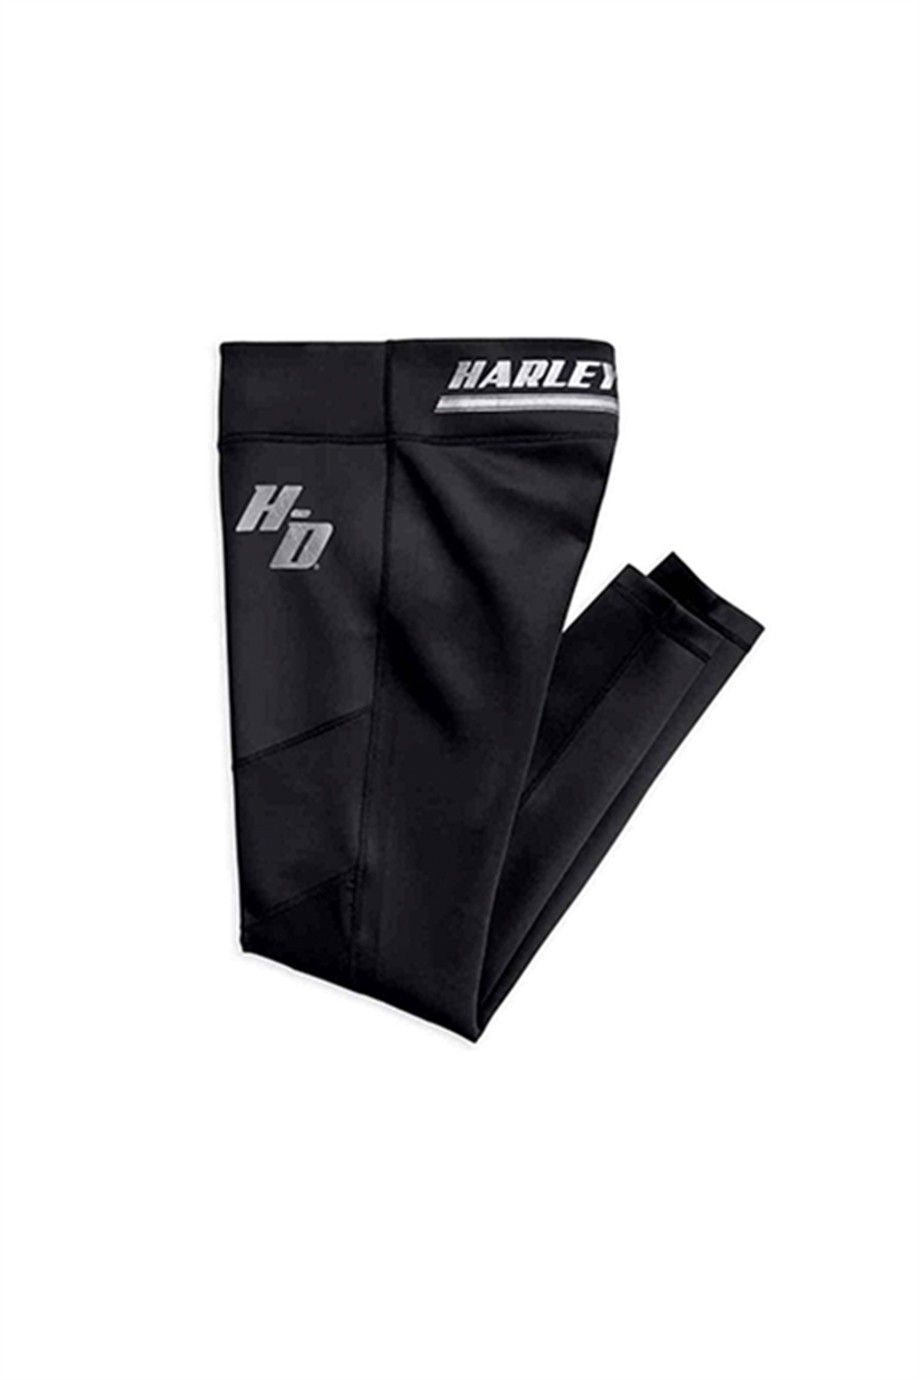 Harley-Davidson® Women's Mesh Accent Activewear Legging, Black